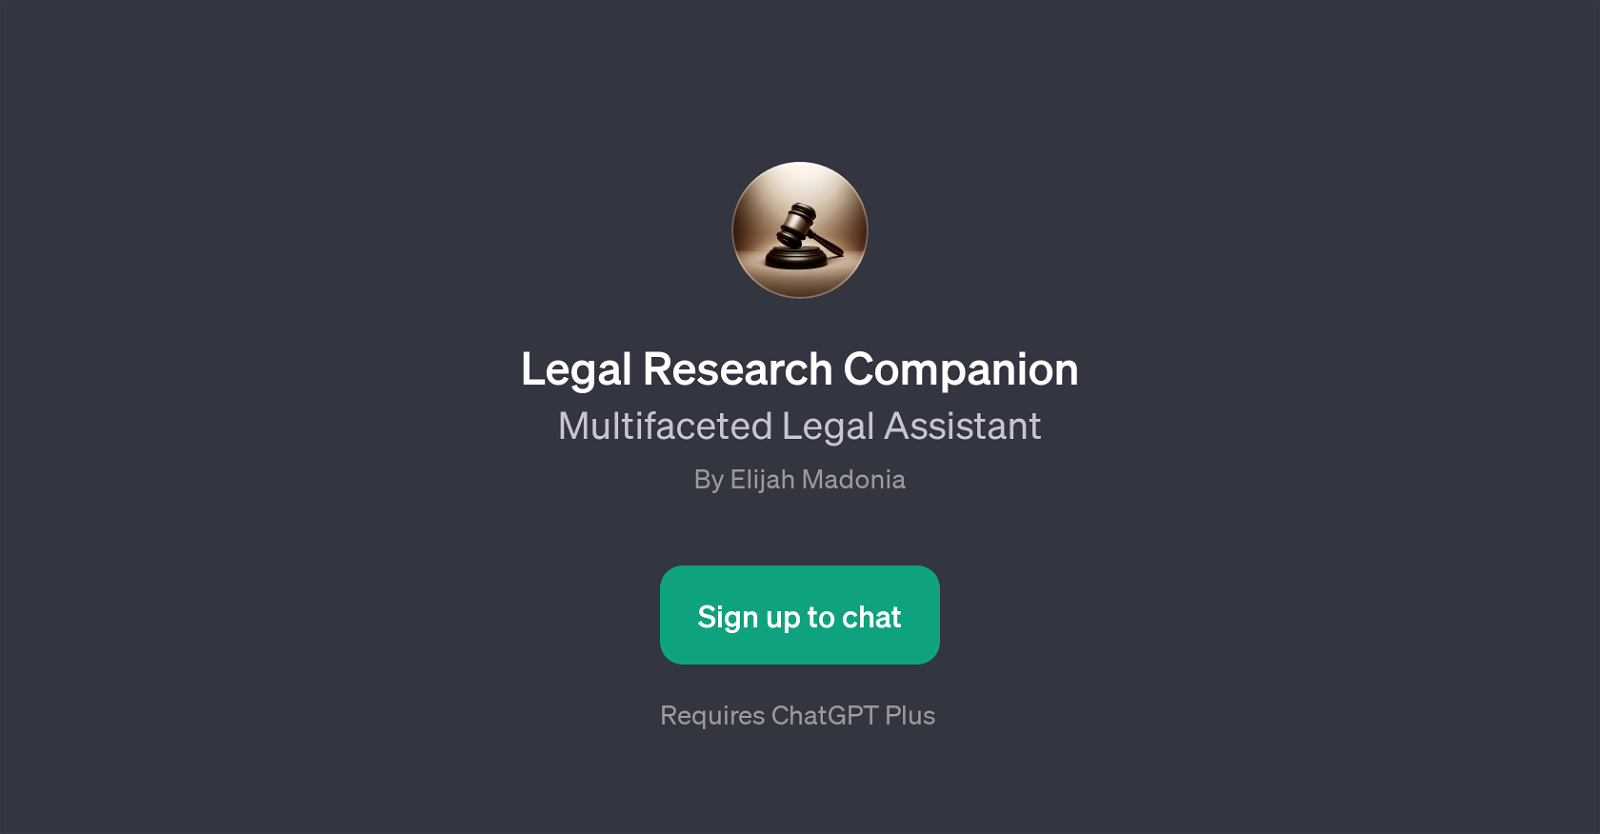 Legal Research Companion website